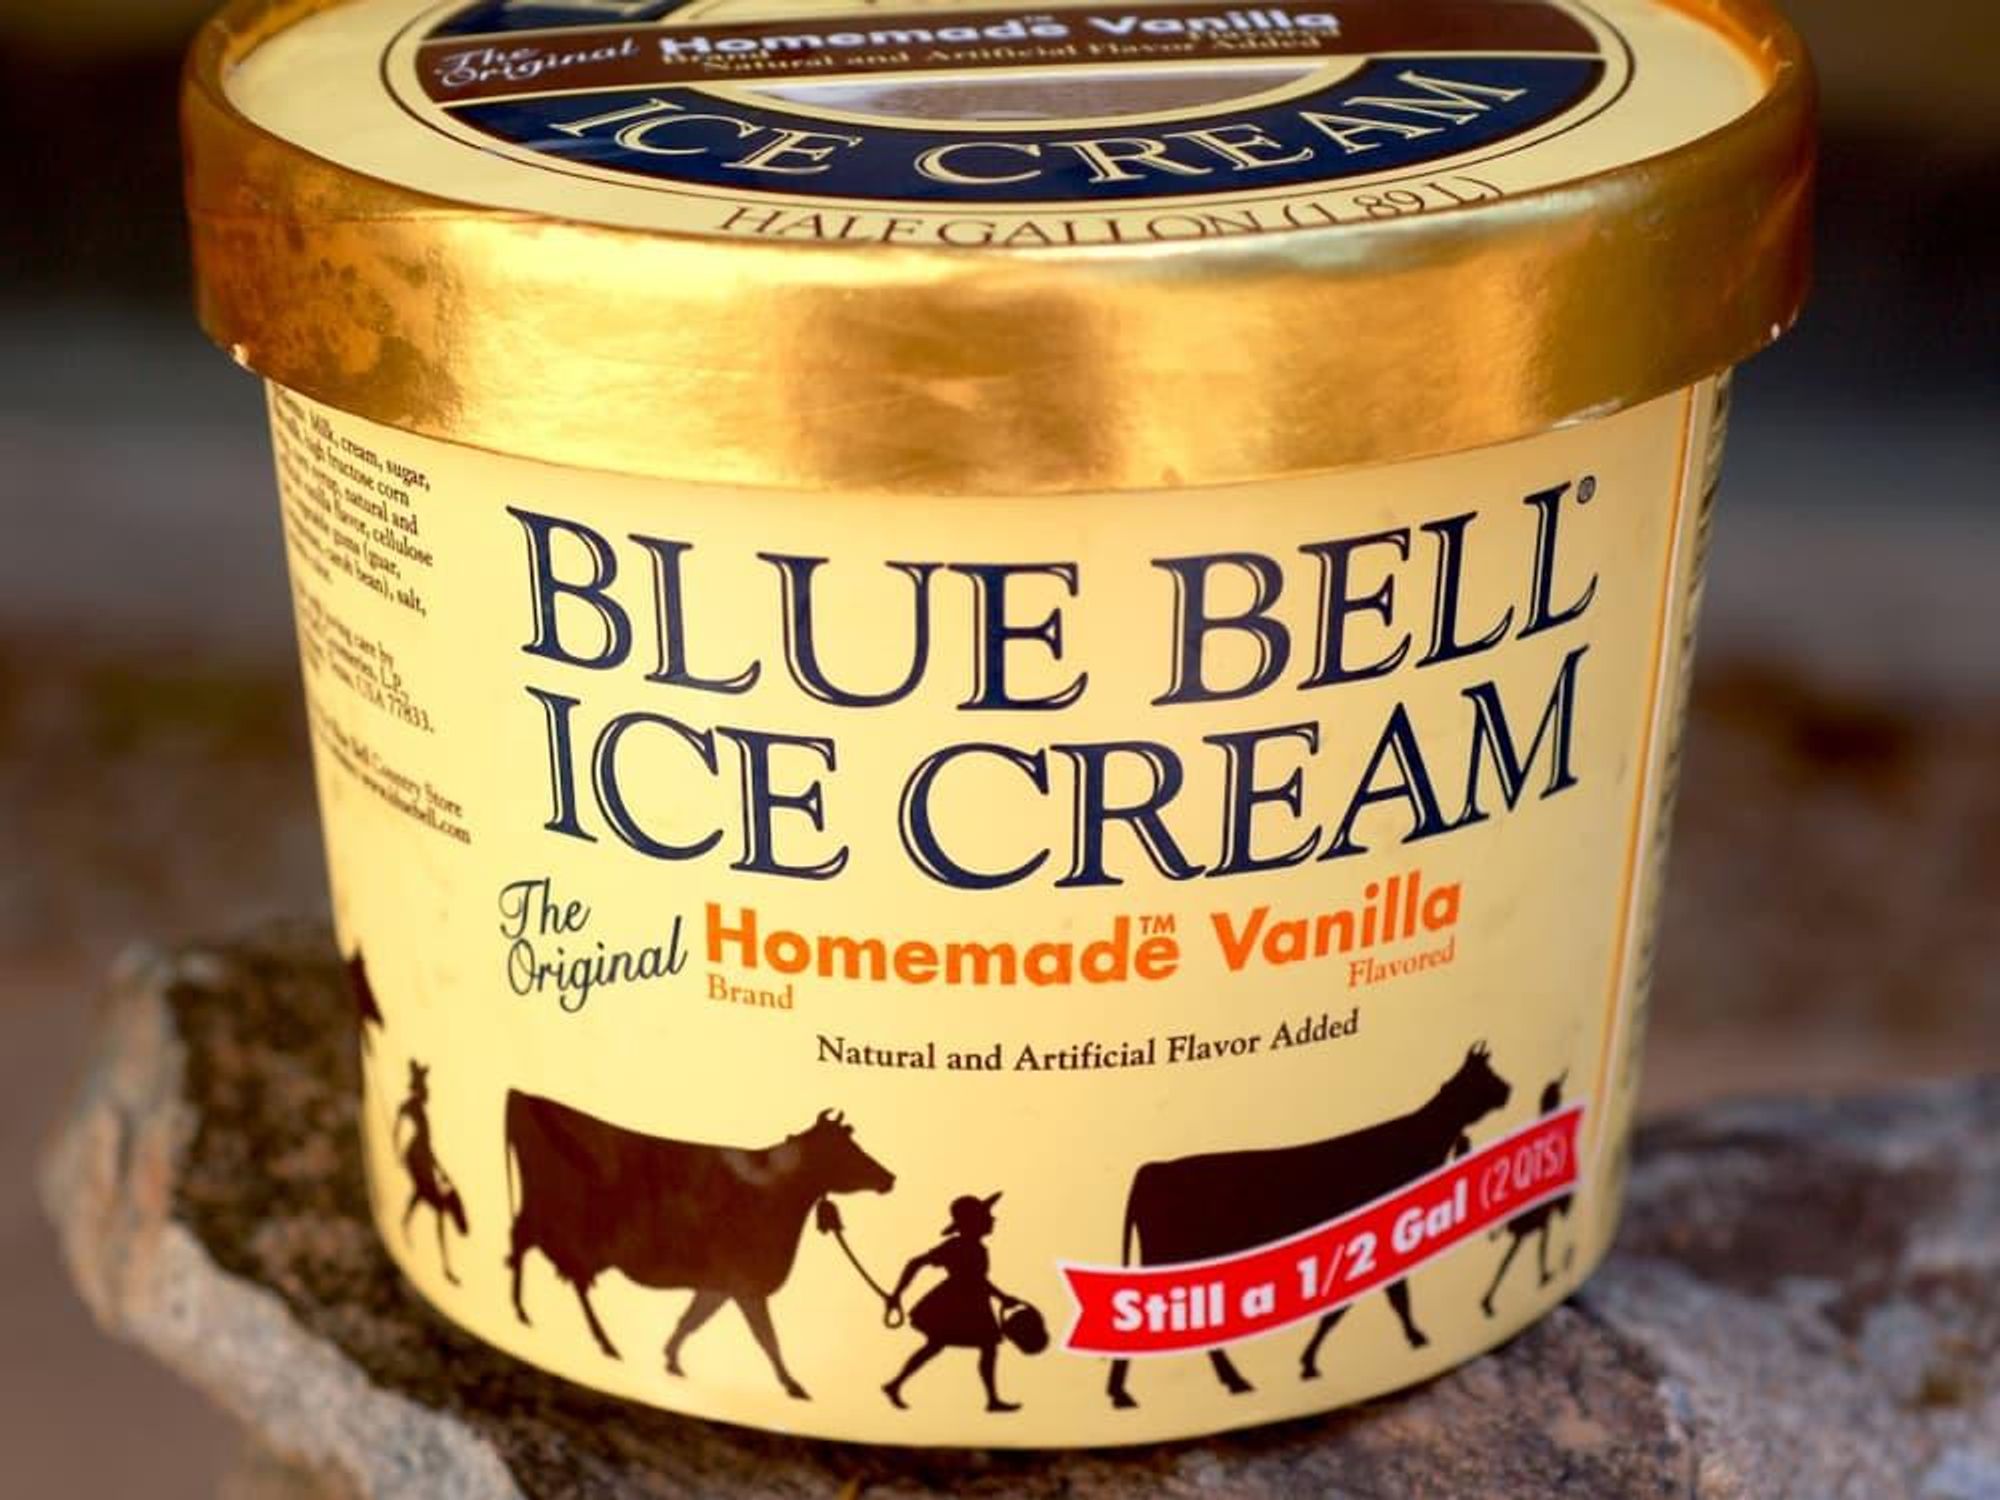 Blue Bell Ice Cream homemade vanilla